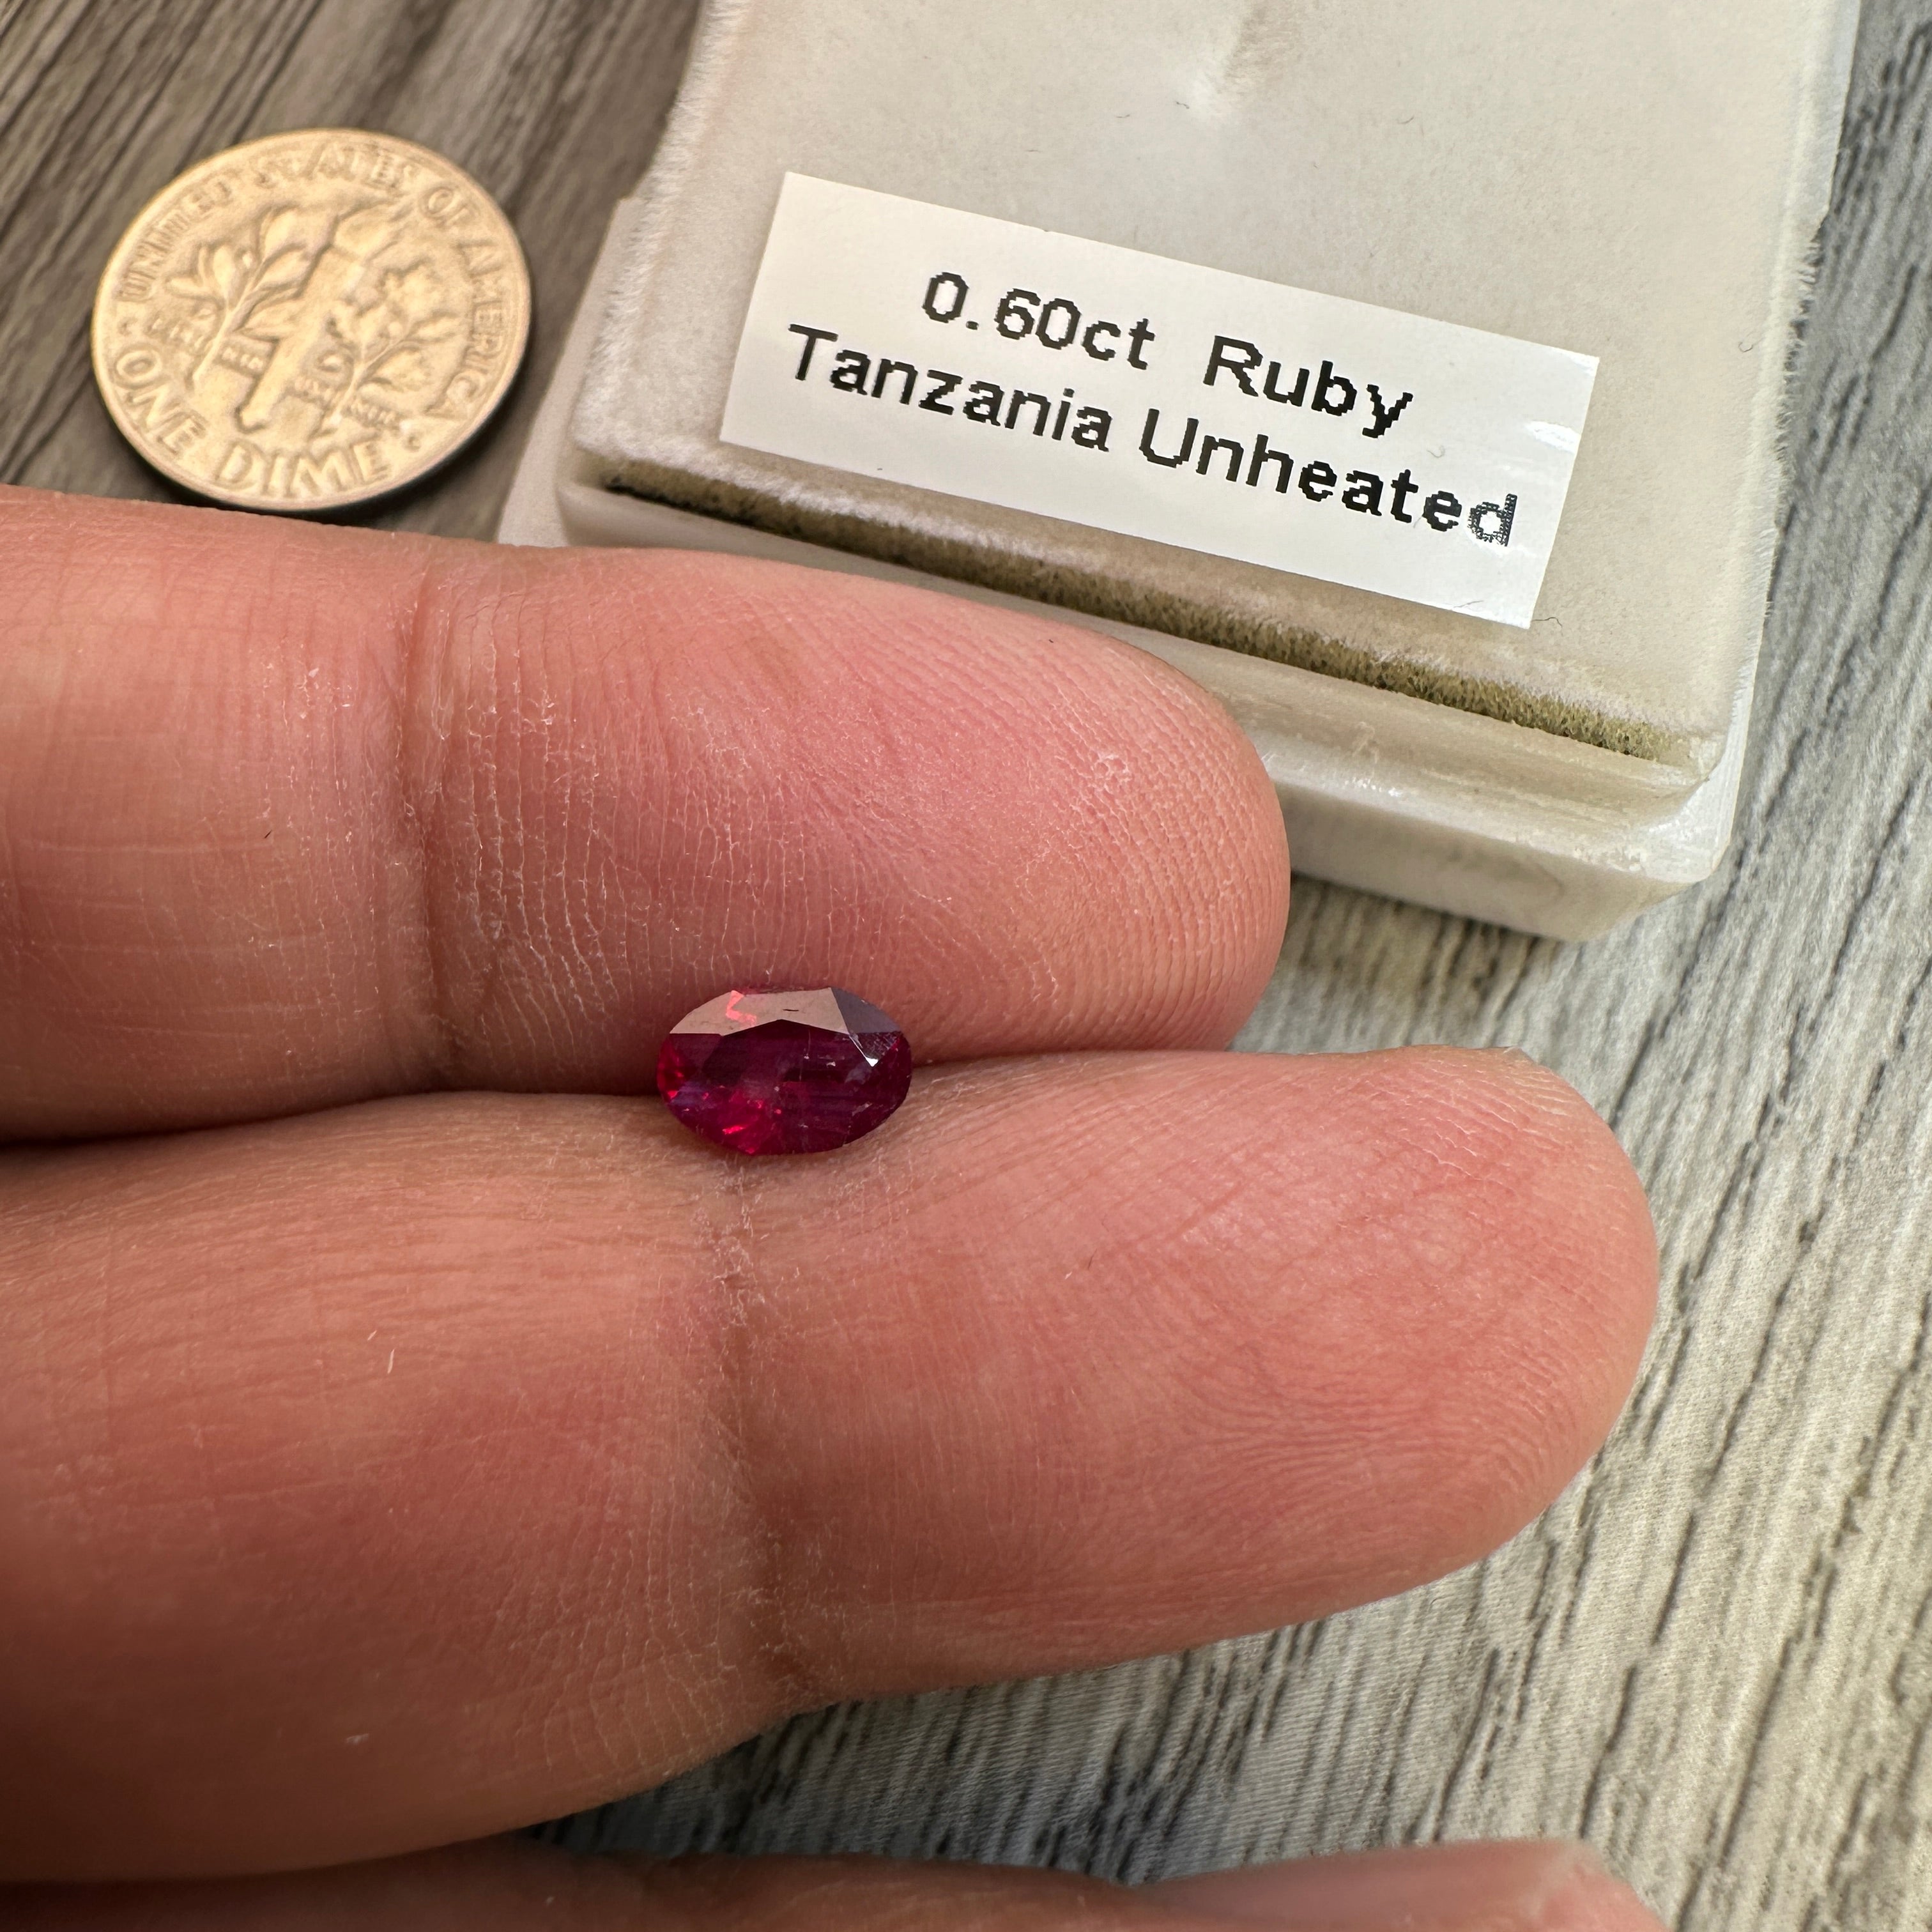 0.60ct Ruby, Tanzania, Untreated Unheated